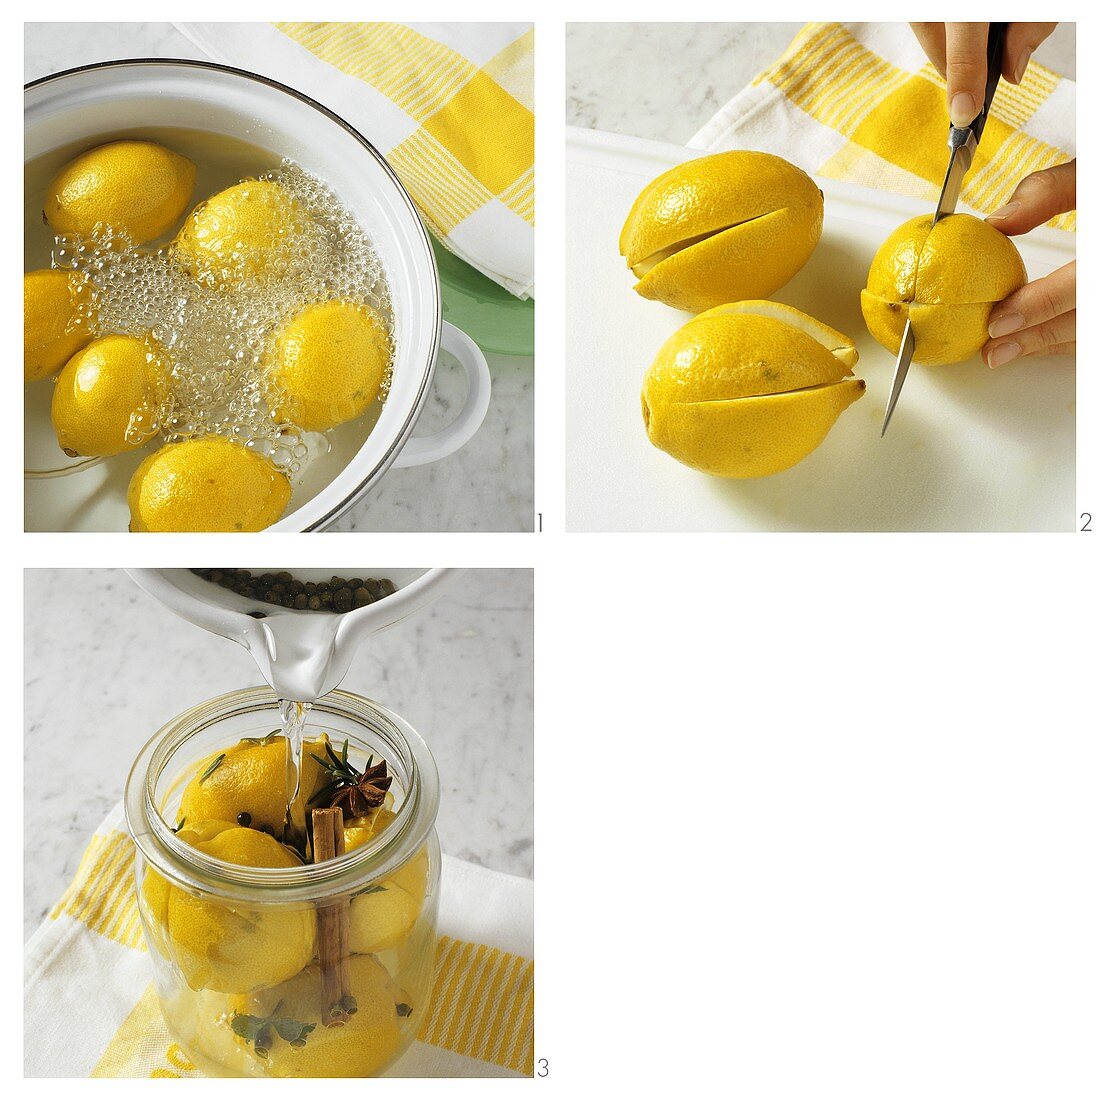 Zitronen einlegen